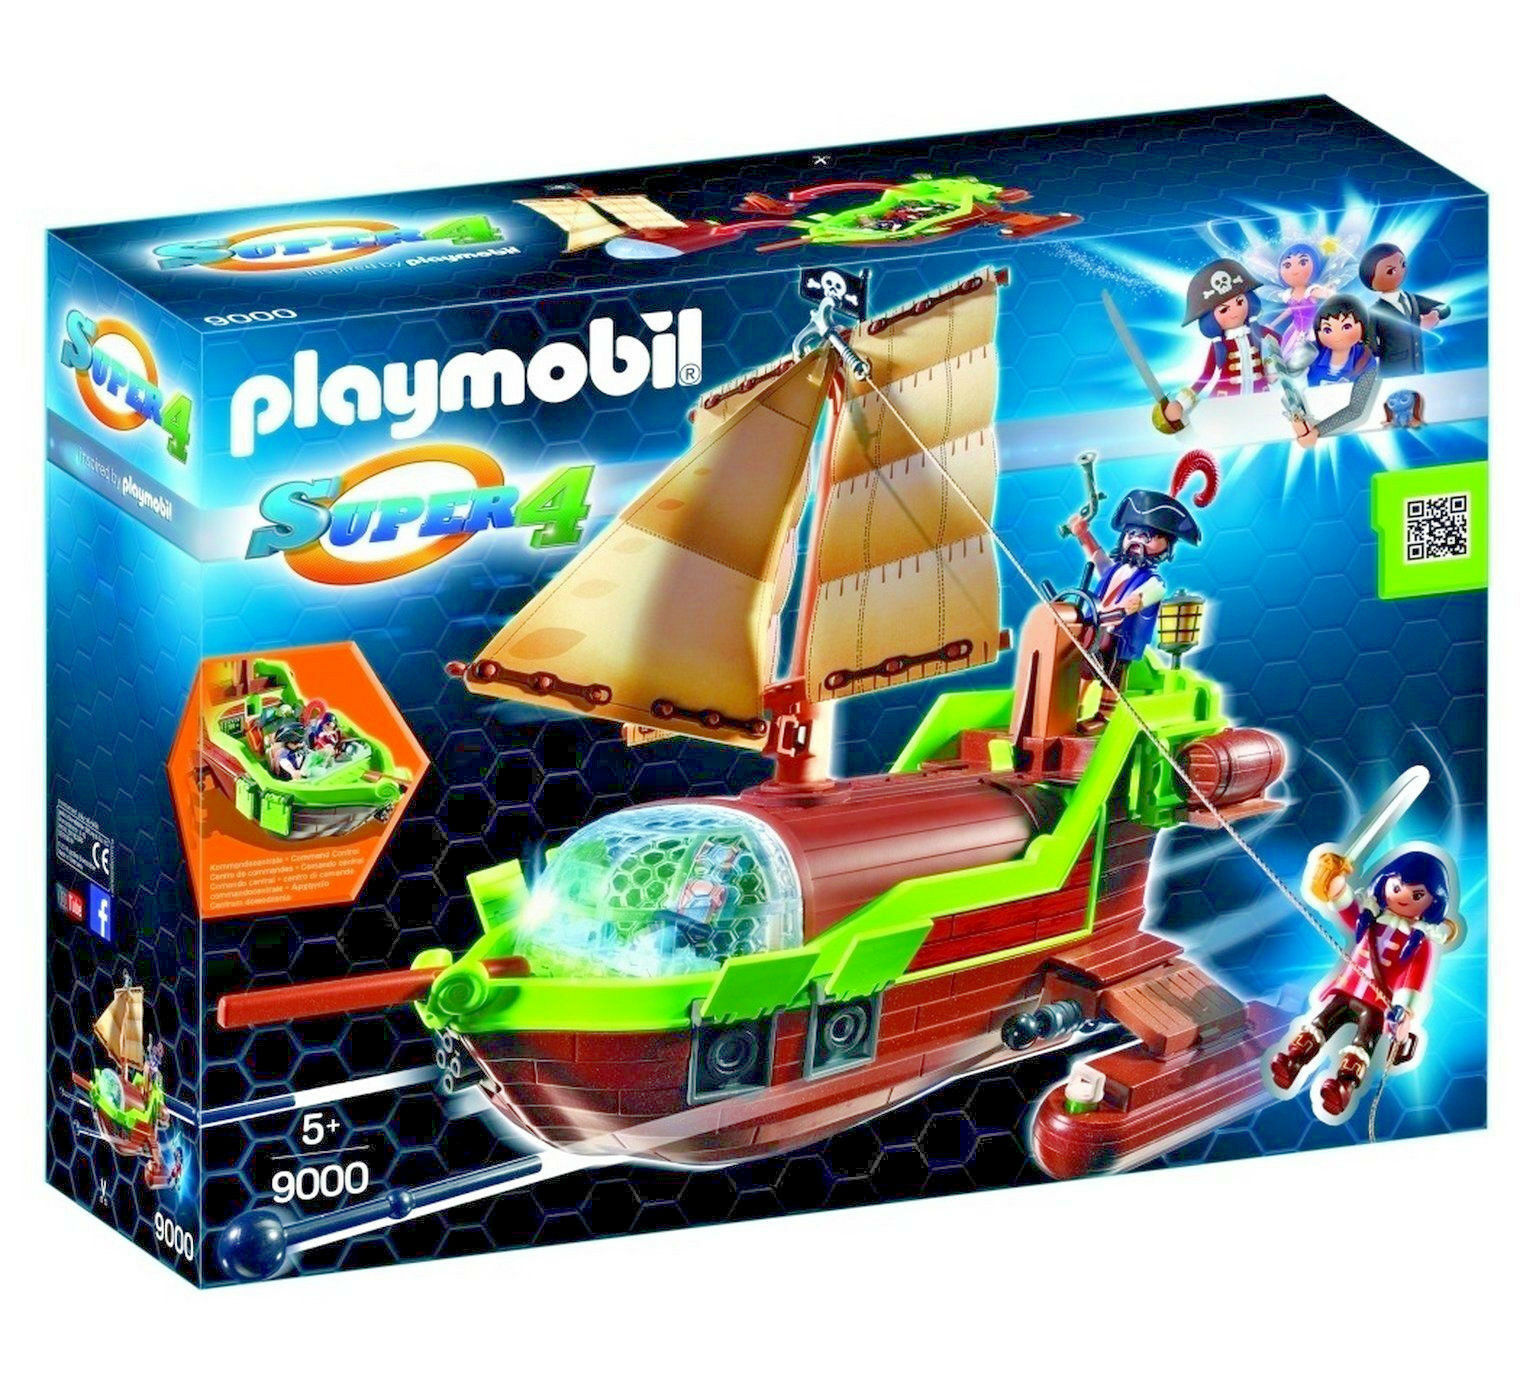 Playmobil 9000 Super 4 Pirates Chameleon Set w/ Ruby